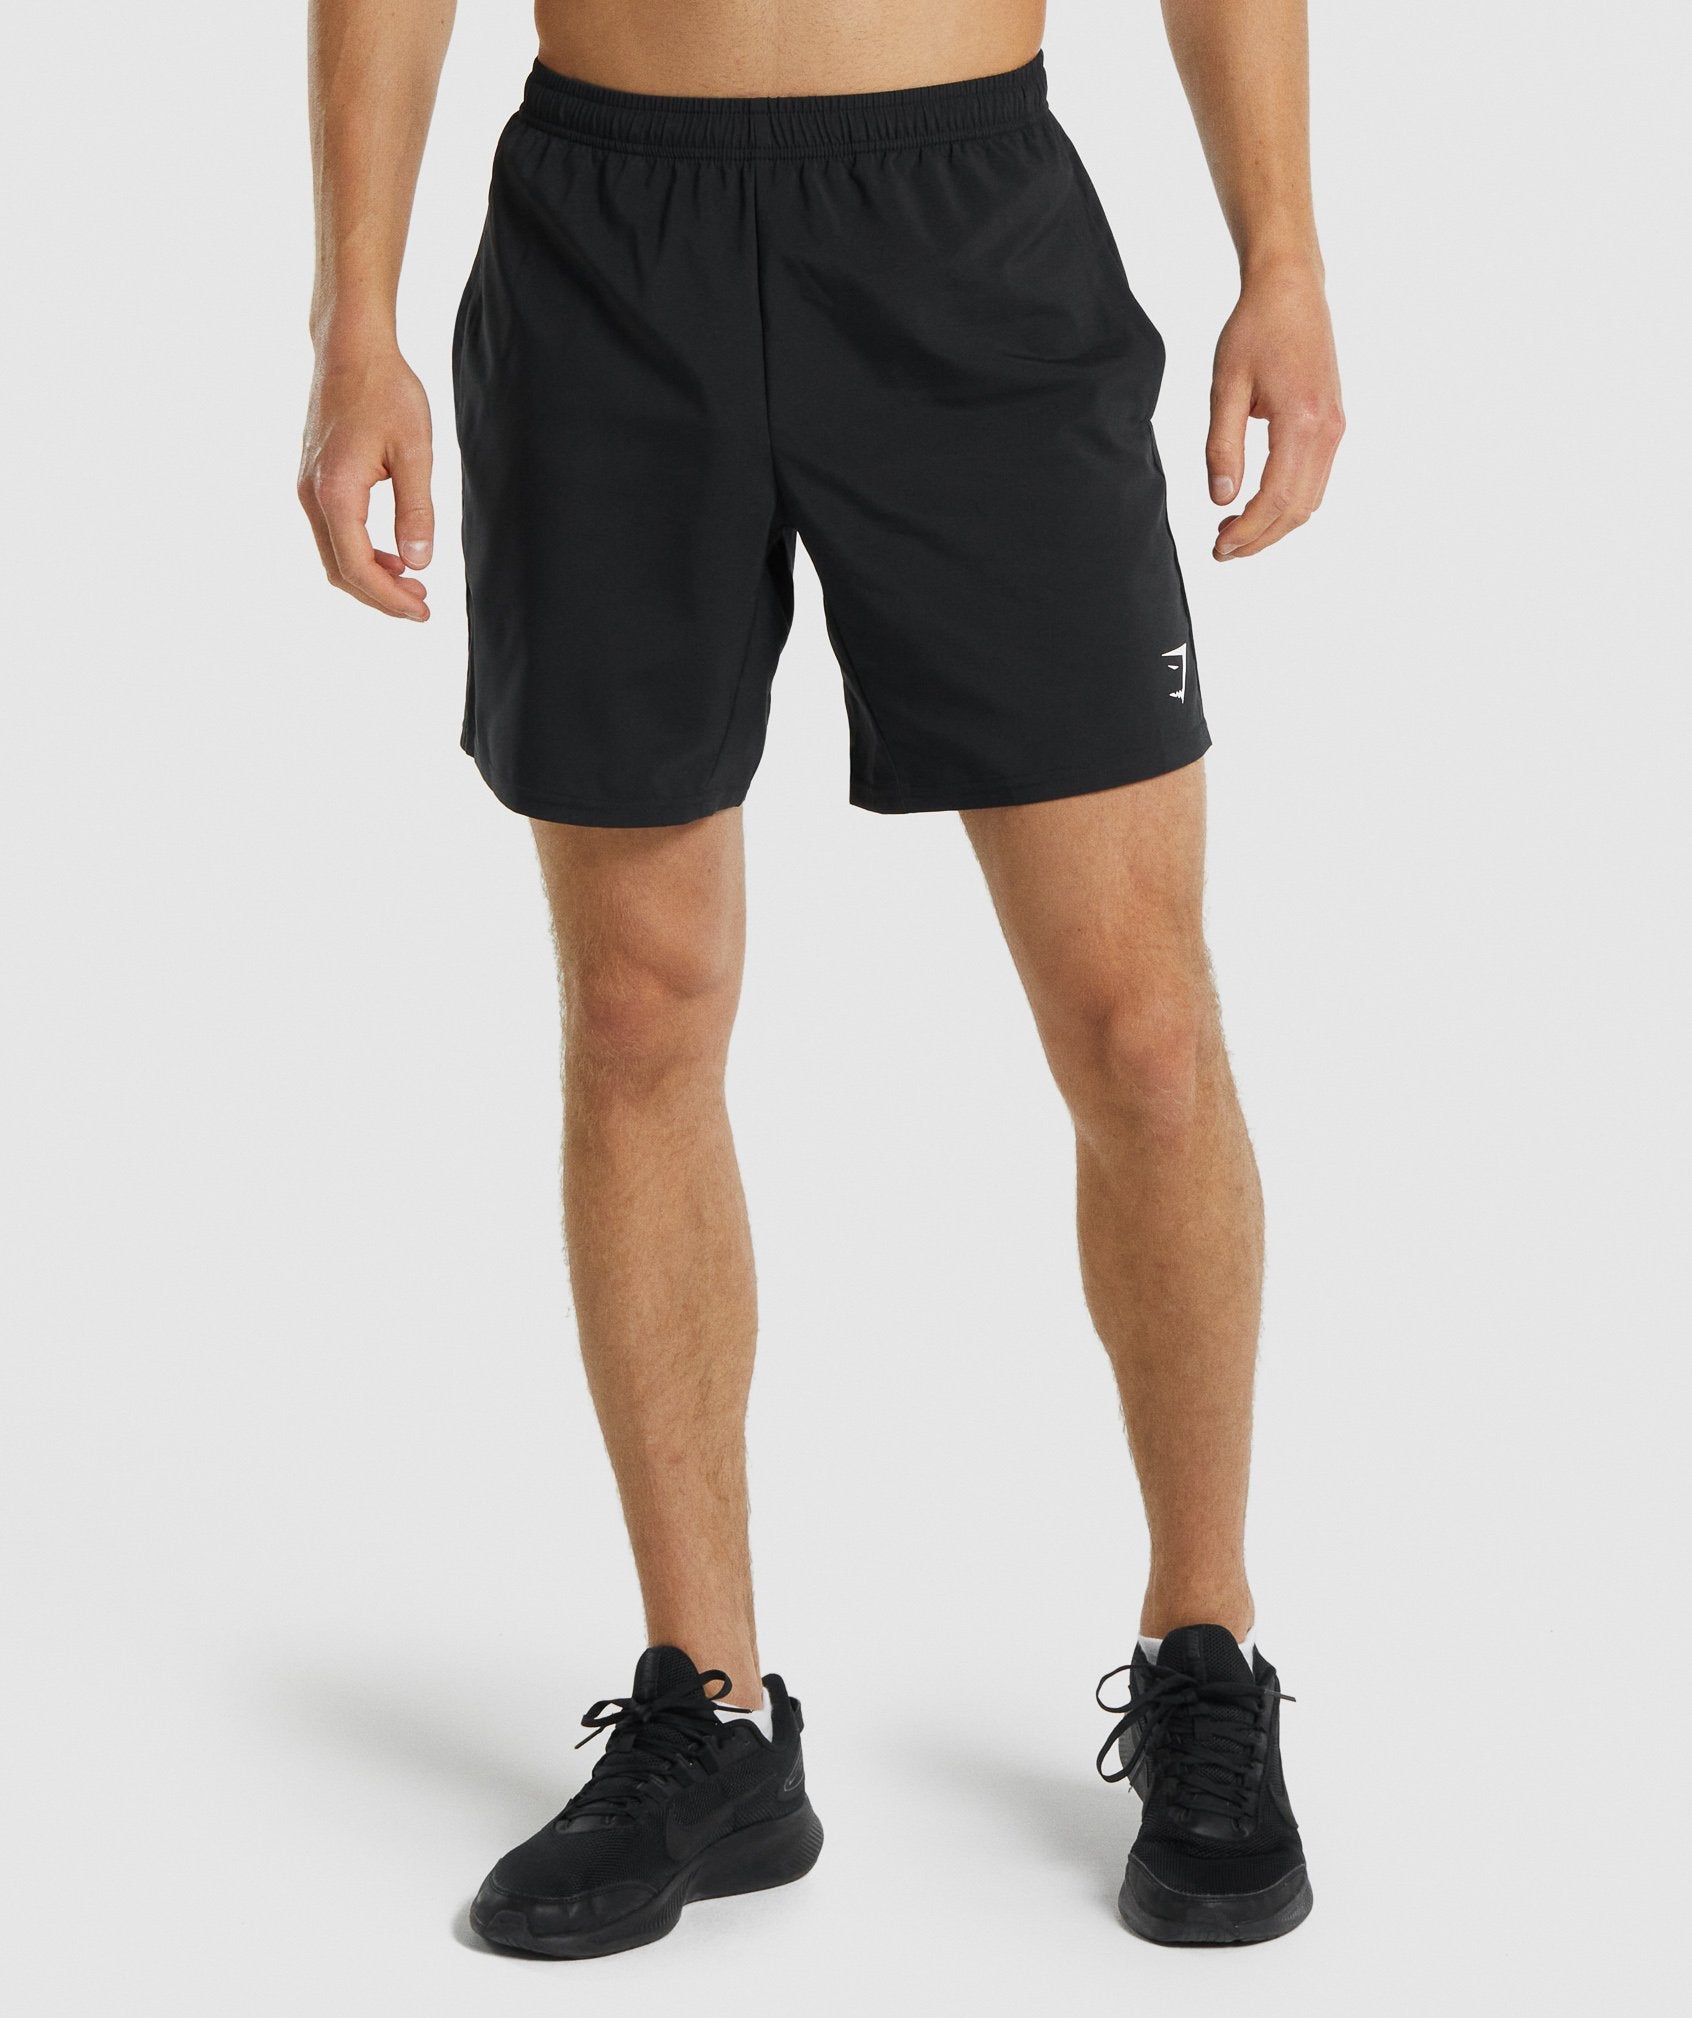 mens sports shorts online